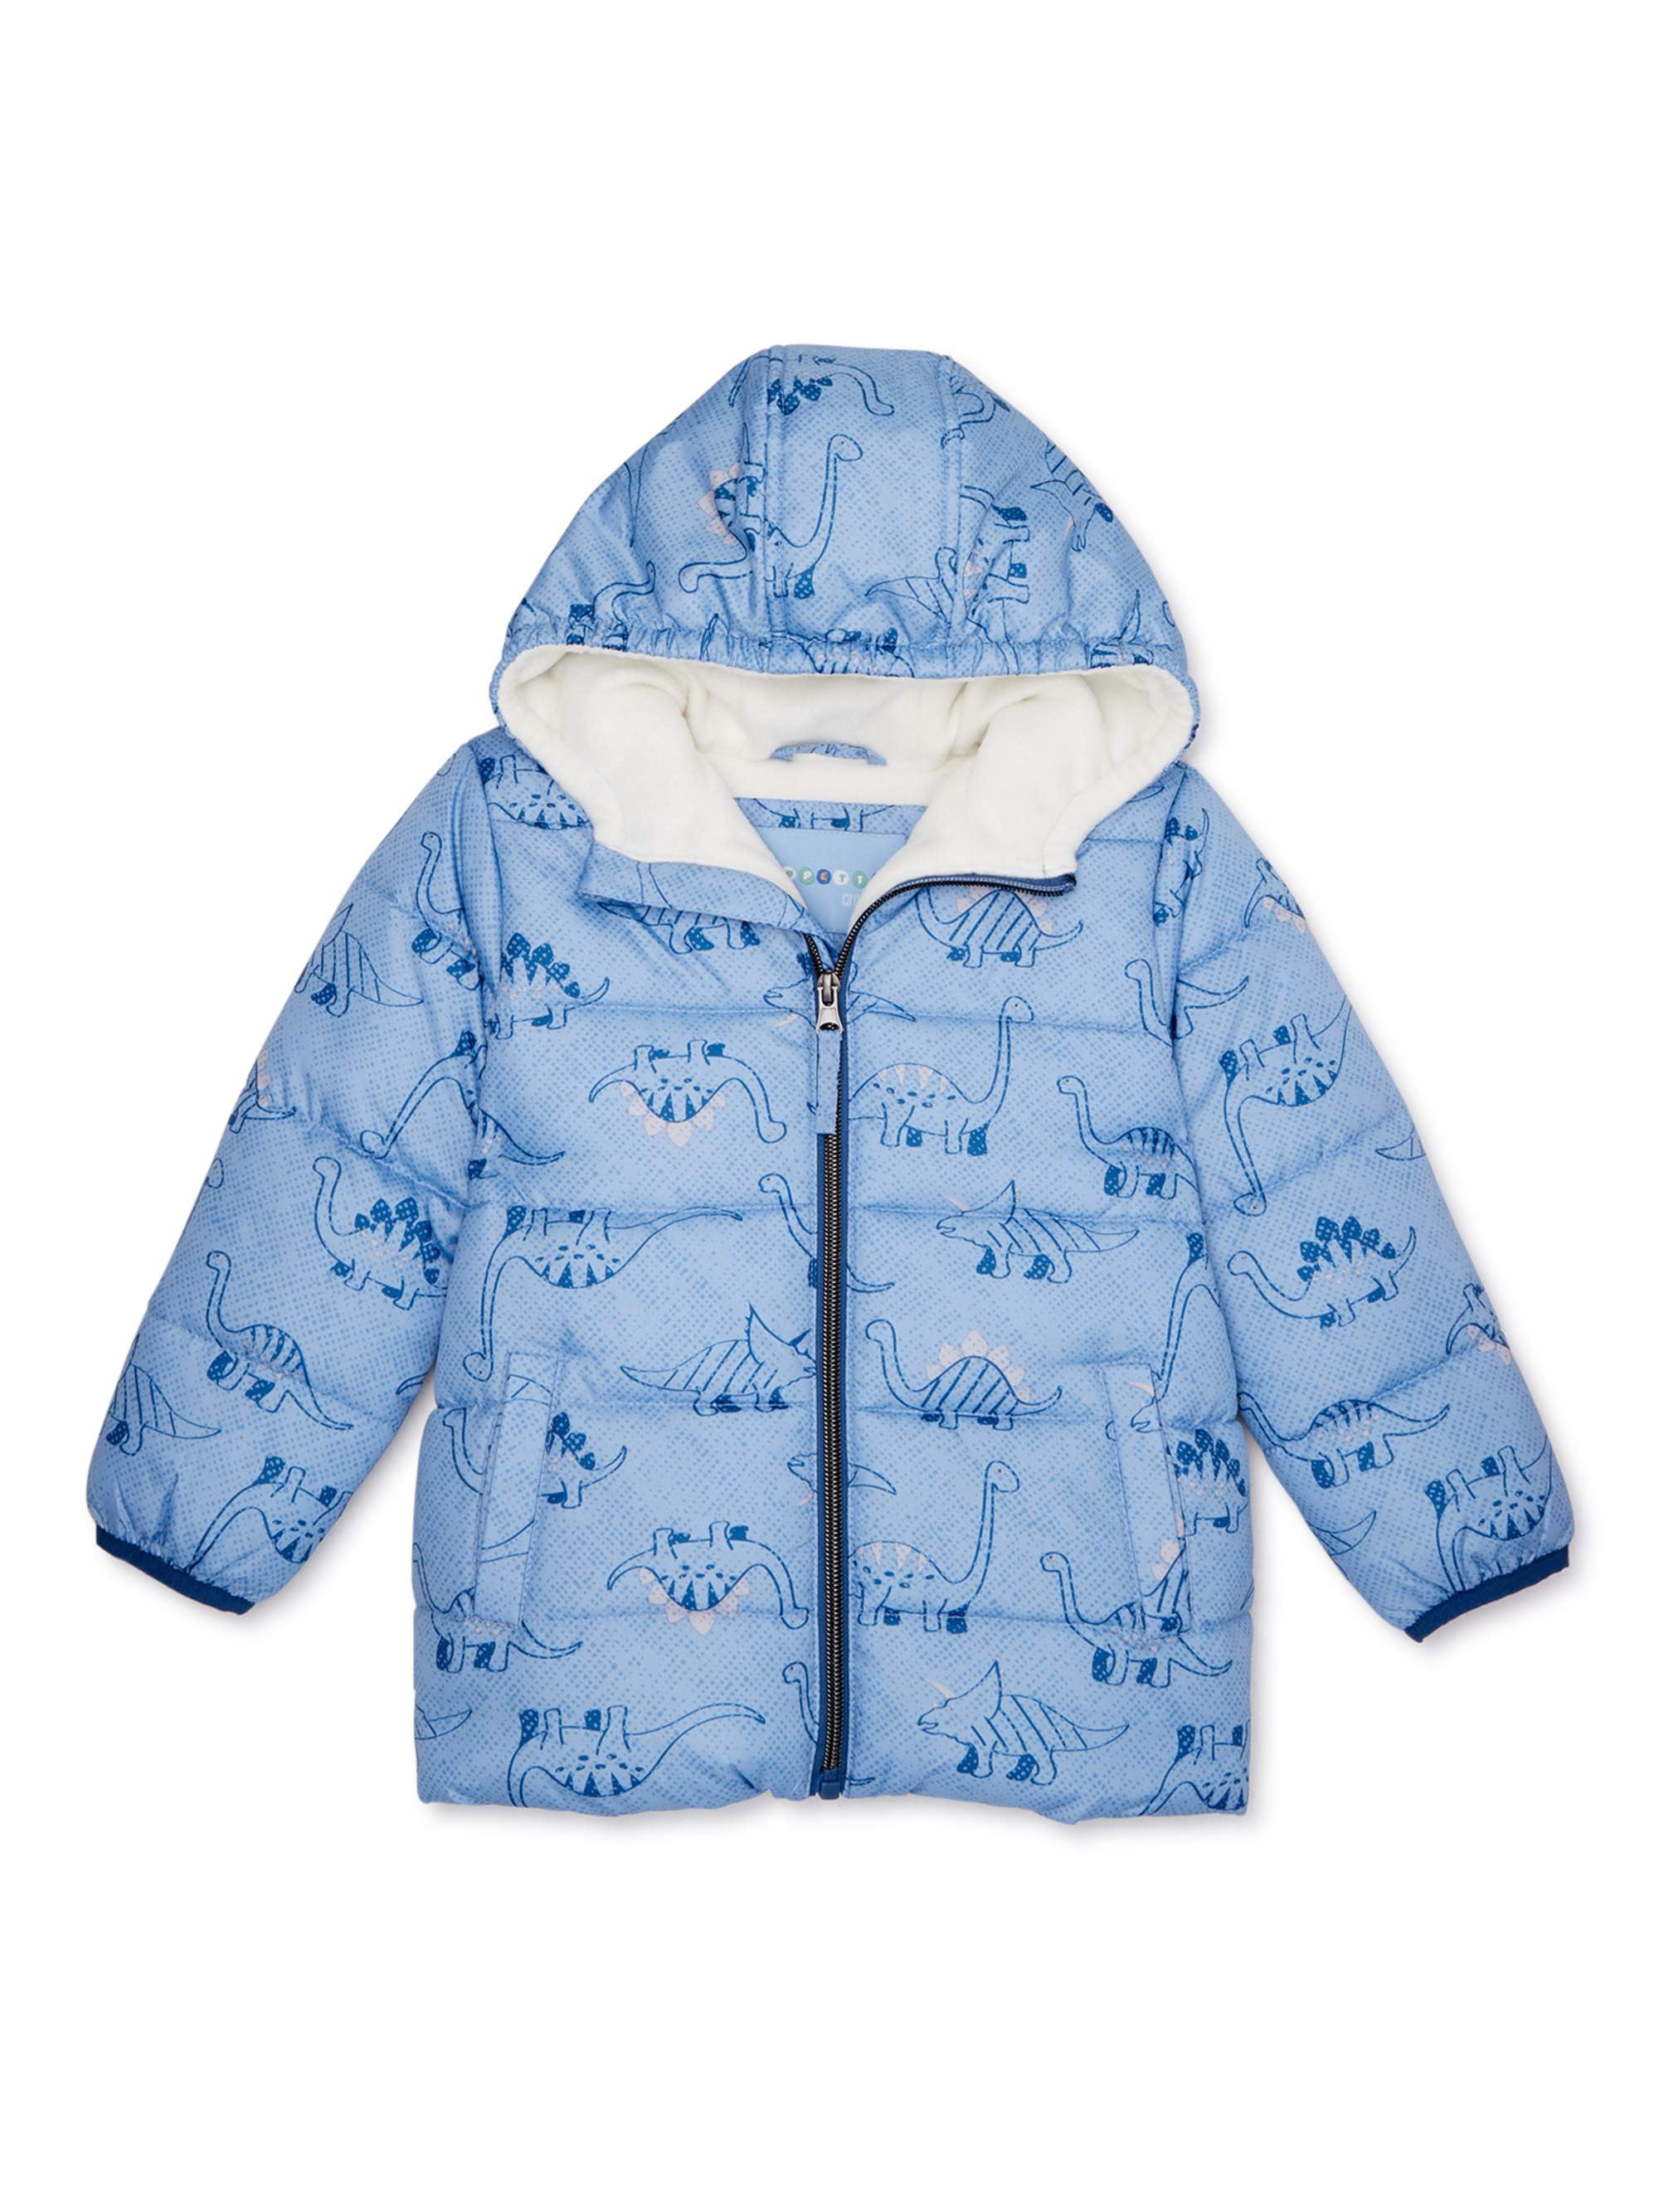 Blue, 3-6 Months Mounter Infant Toddler Baby Warm Thicken Down Jacket Outwear Windbreaker Tops 3M-24M 2018 Kids Baby Boy Dinosaur Camouflage Hooded Coat